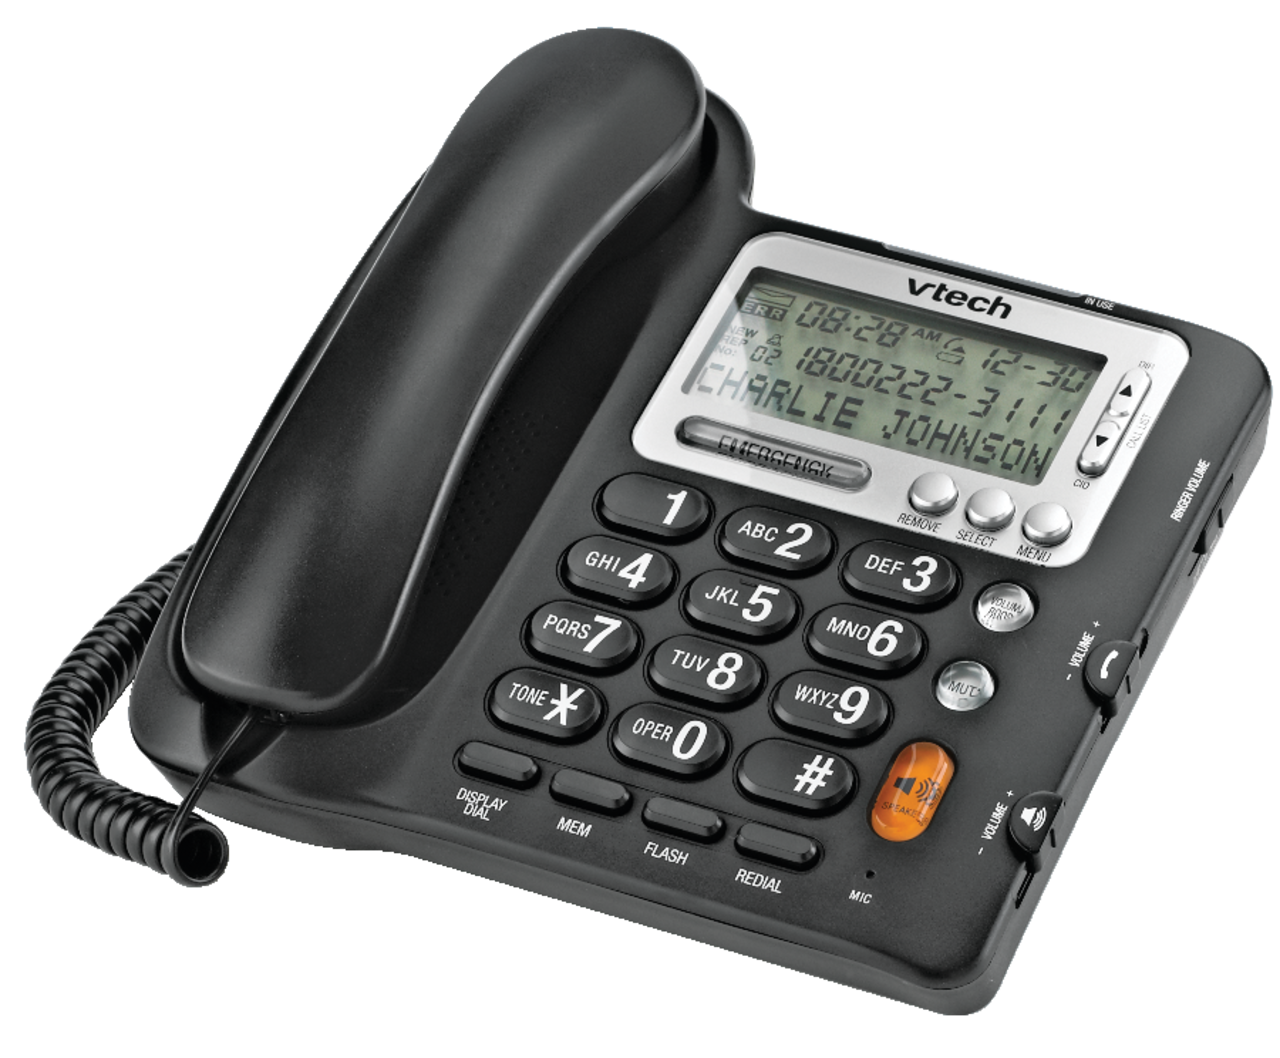 CD1281 - VTech® Cordless Phones